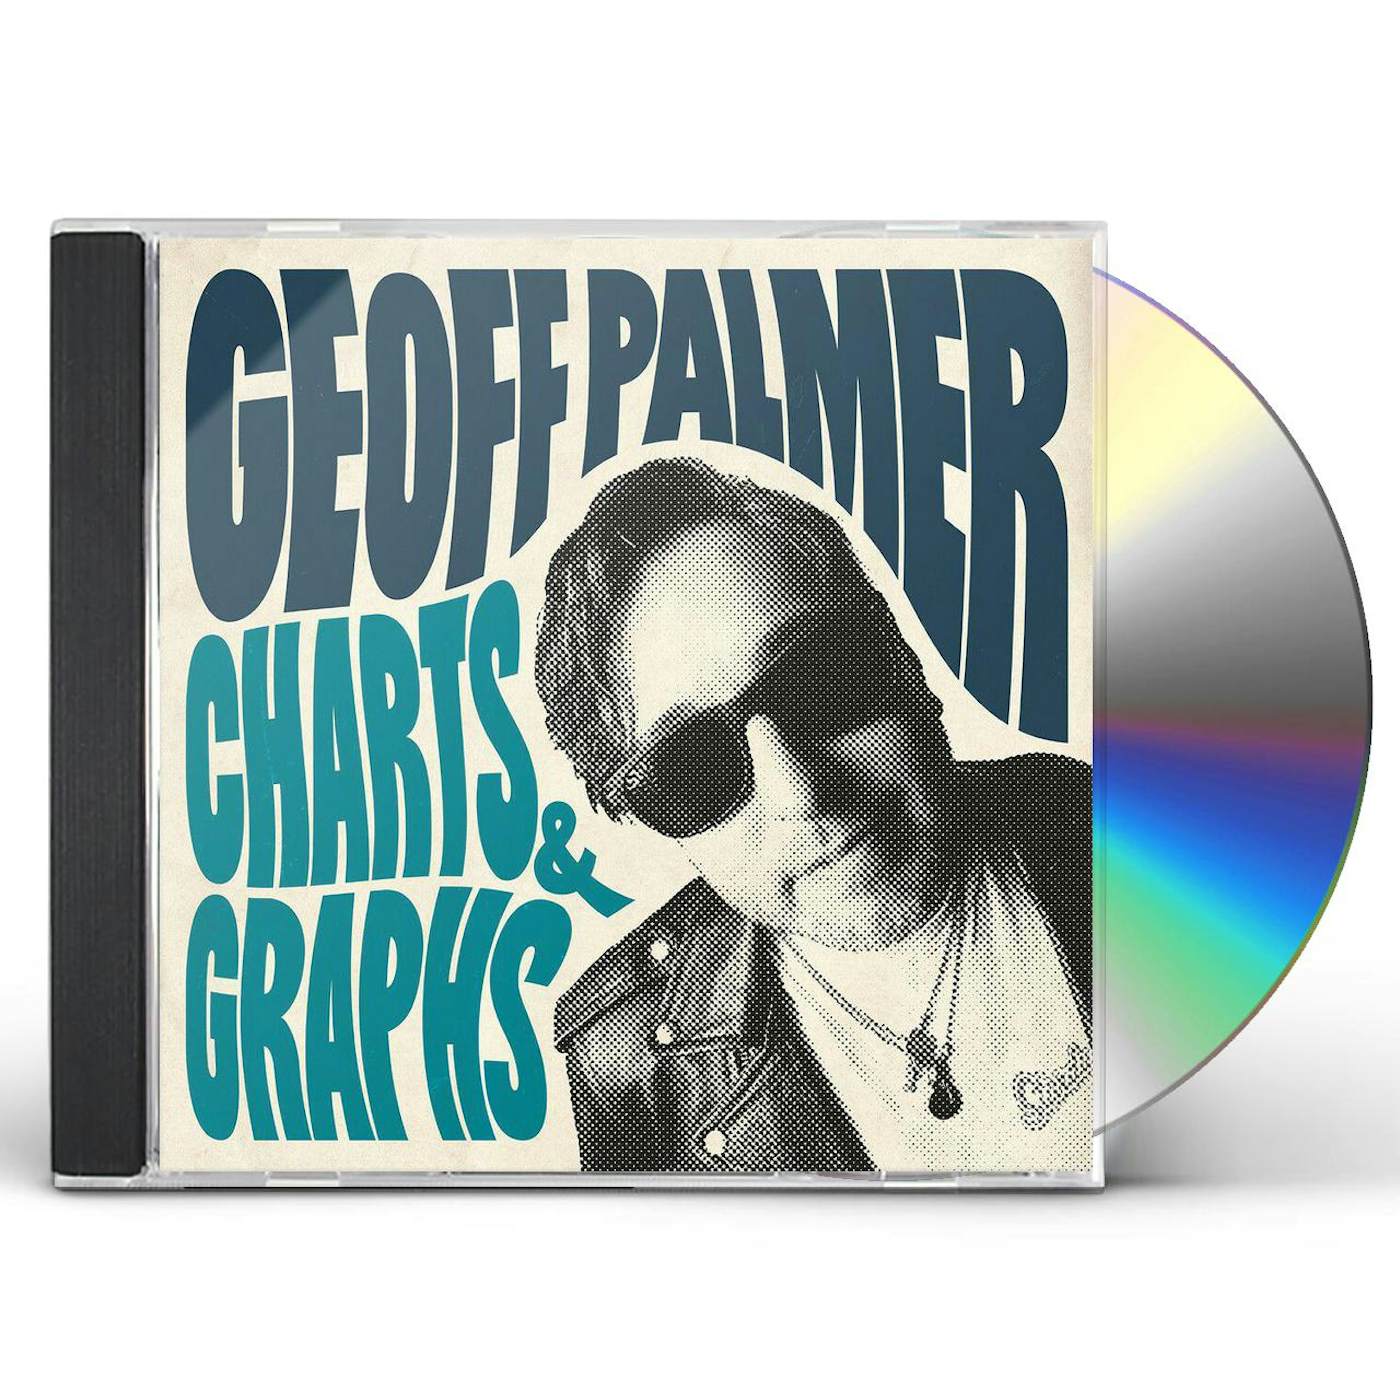 Geoff Palmer CHARTS & GRAPHS CD